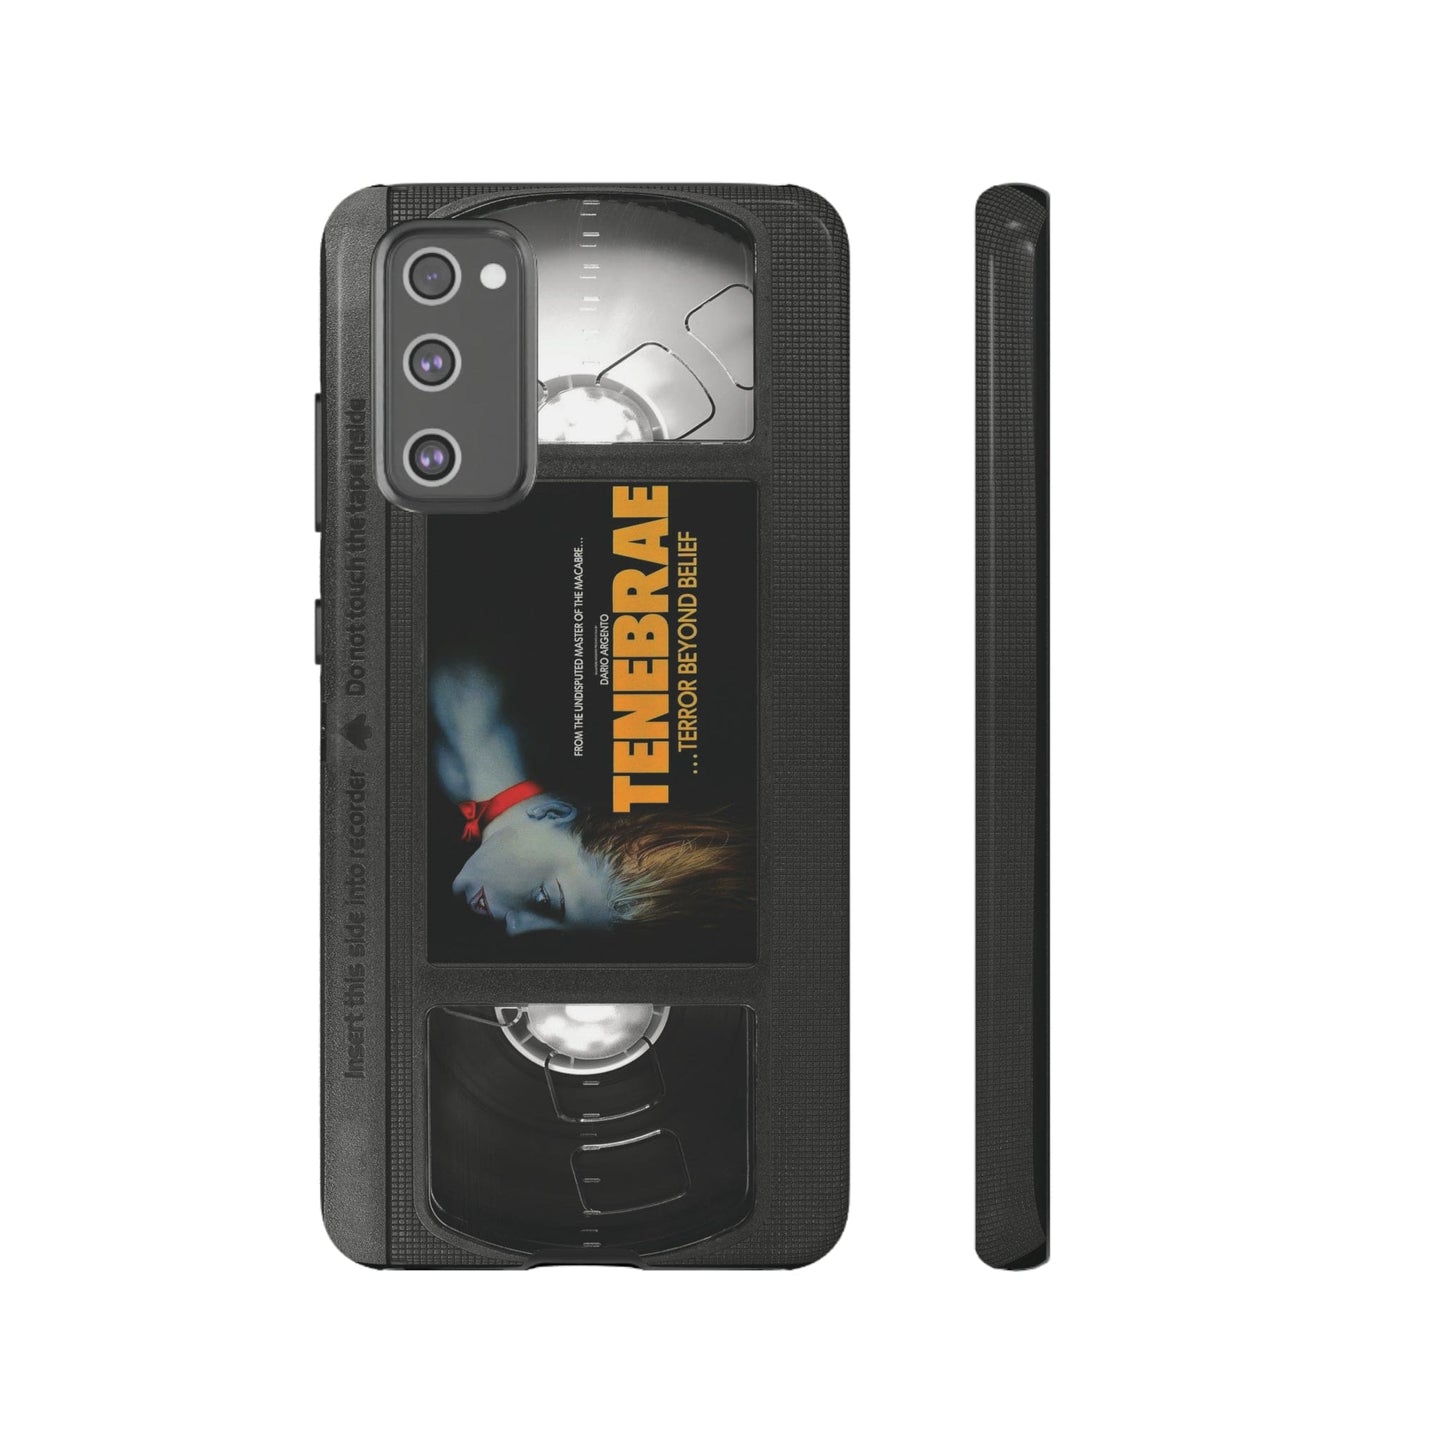 Tenebrae Impact VHS Phone Case